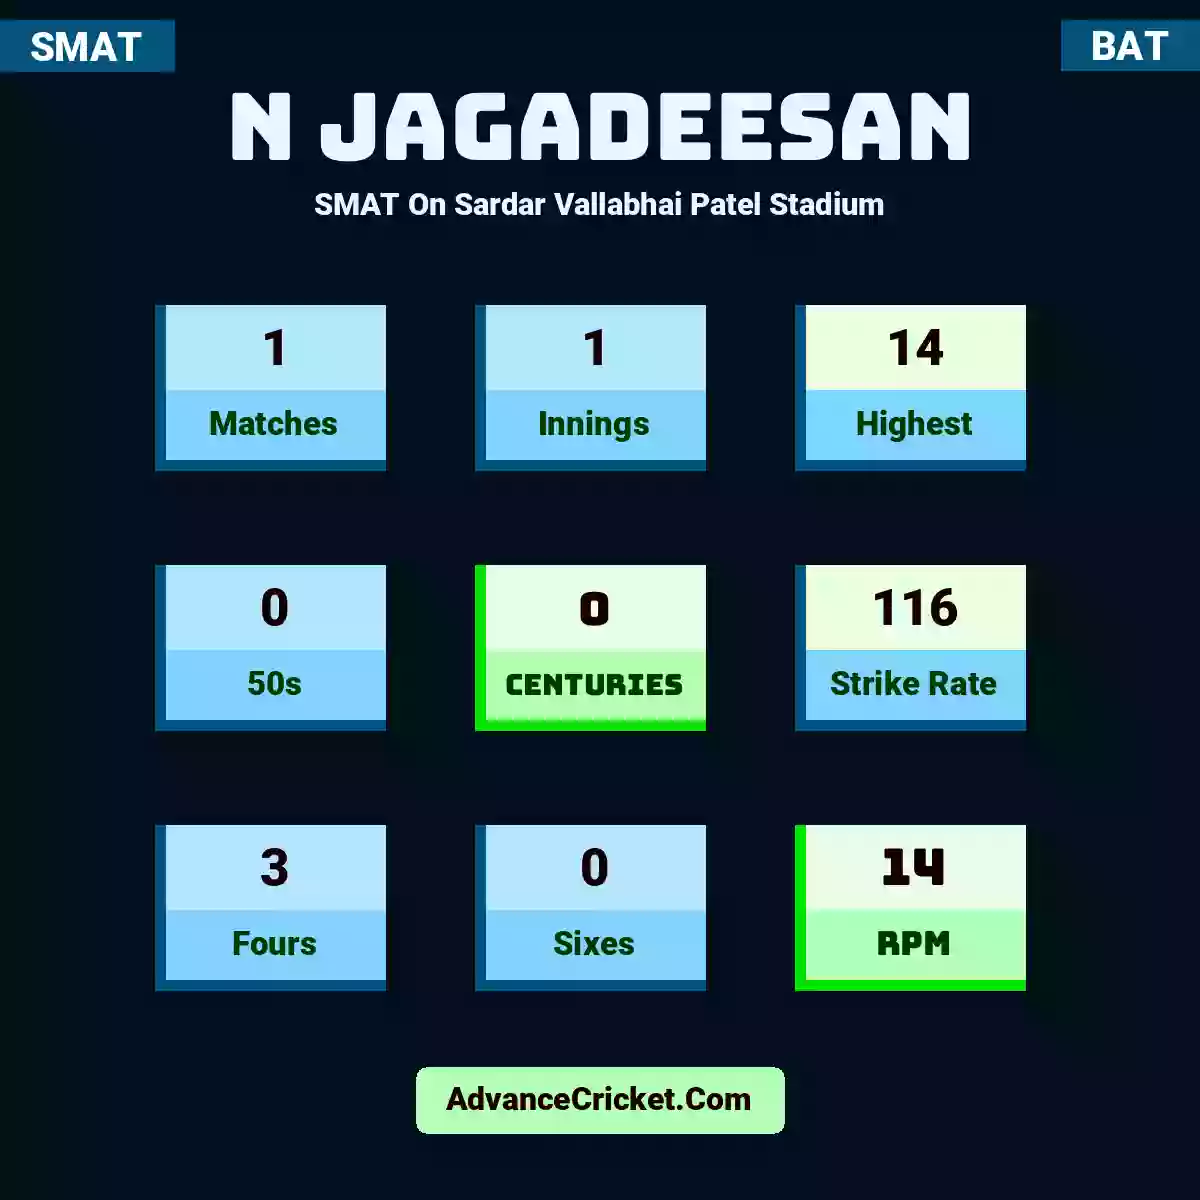 N Jagadeesan SMAT  On Sardar Vallabhai Patel Stadium, N Jagadeesan played 1 matches, scored 14 runs as highest, 0 half-centuries, and 0 centuries, with a strike rate of 116. N.Jagadeesan hit 3 fours and 0 sixes, with an RPM of 14.